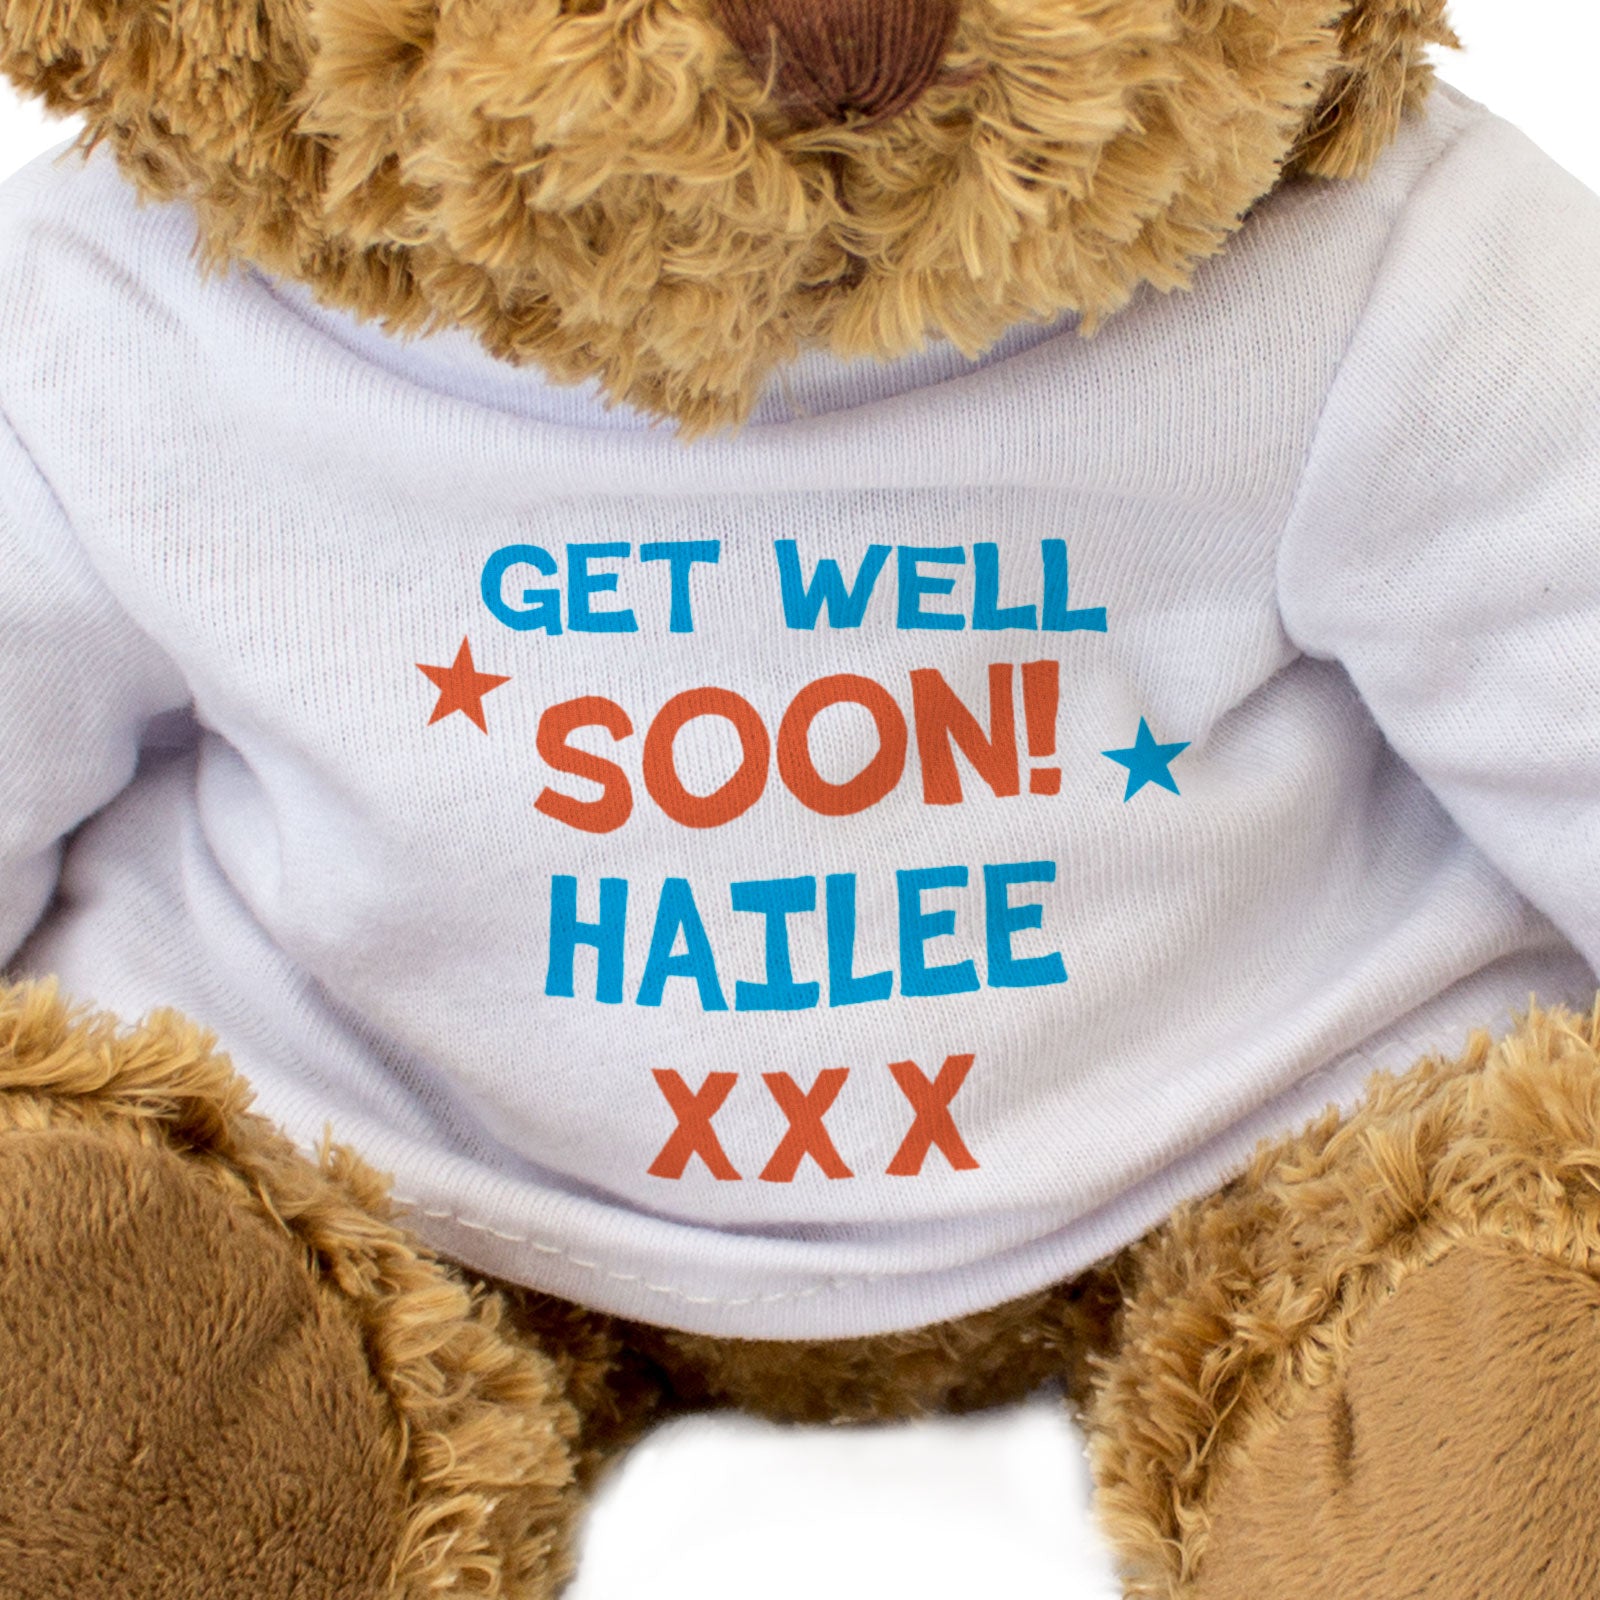 Get Well Soon Hailee - Teddy Bear